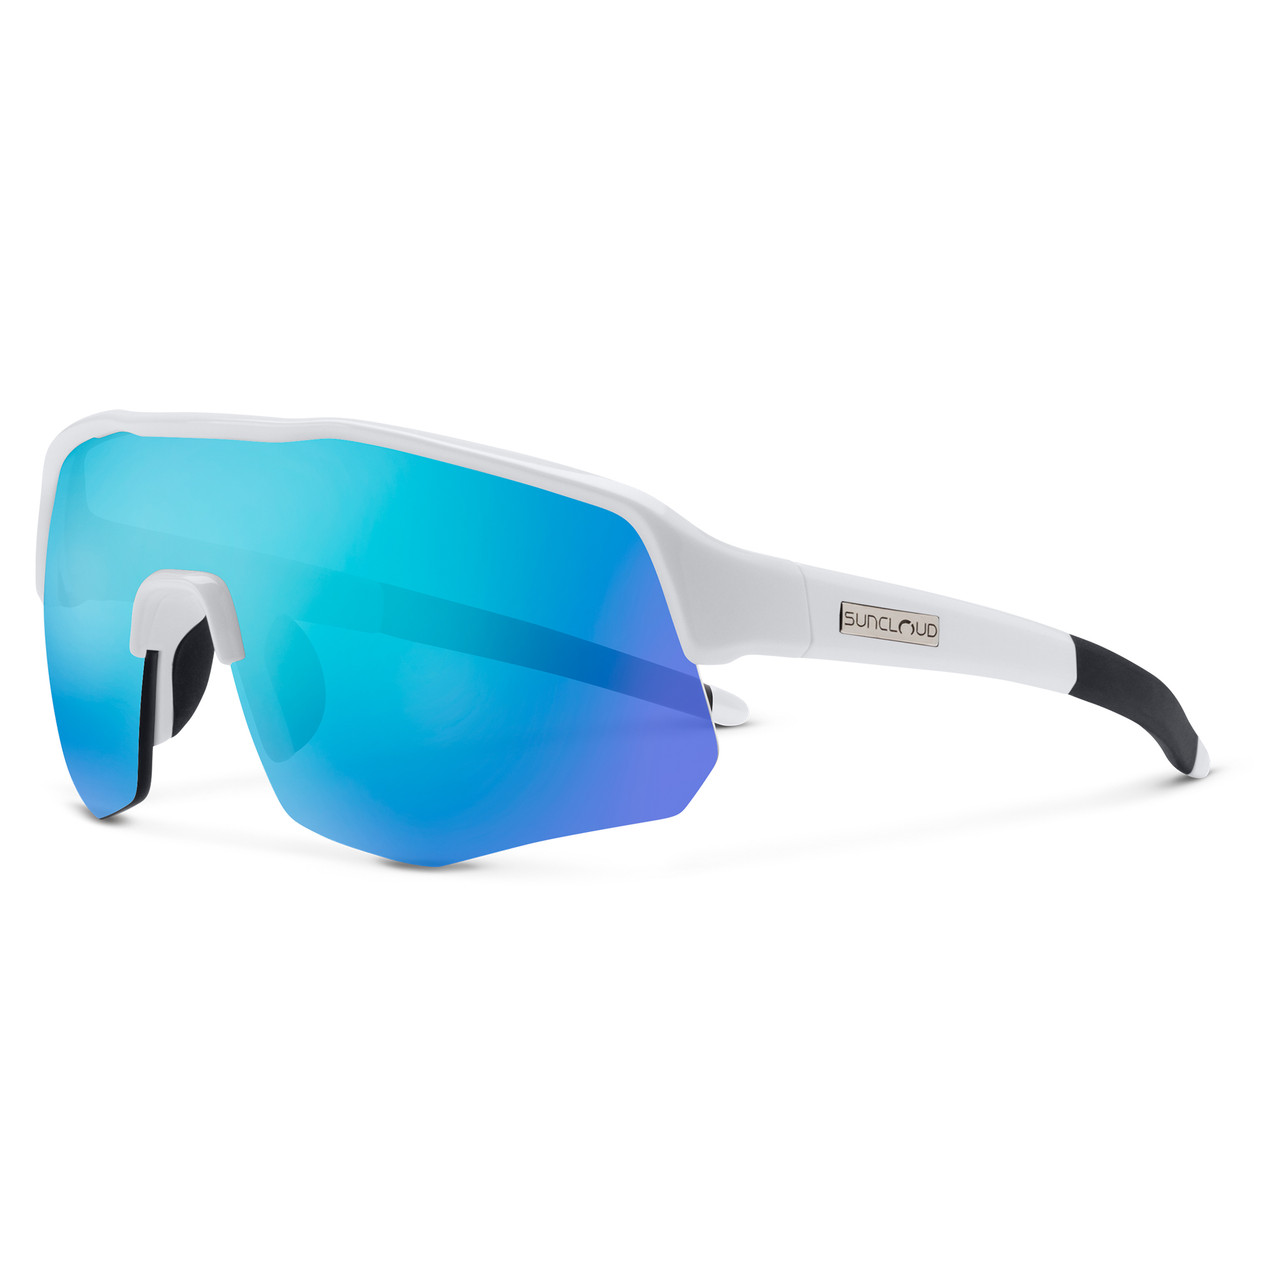 Profile View of Suncloud Cadence Pit Viper Style Semi-Rimless Sport Shield Sunglasses in White with Polar Blue Mirror